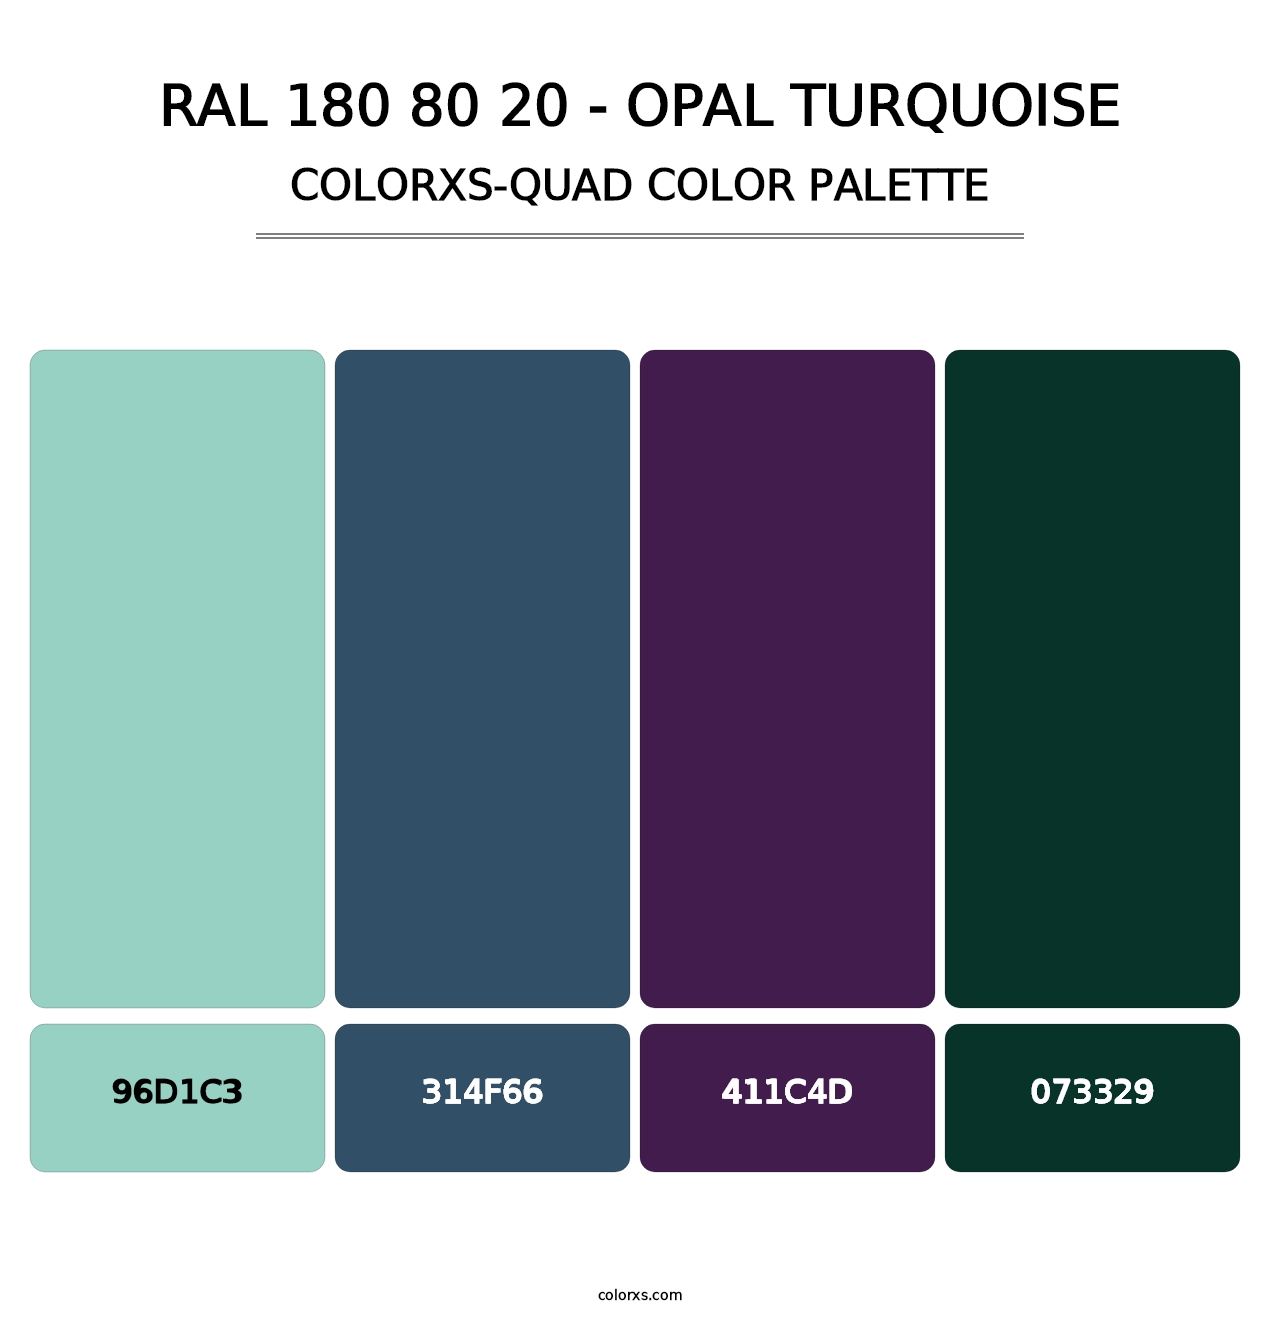 RAL 180 80 20 - Opal Turquoise - Colorxs Quad Palette